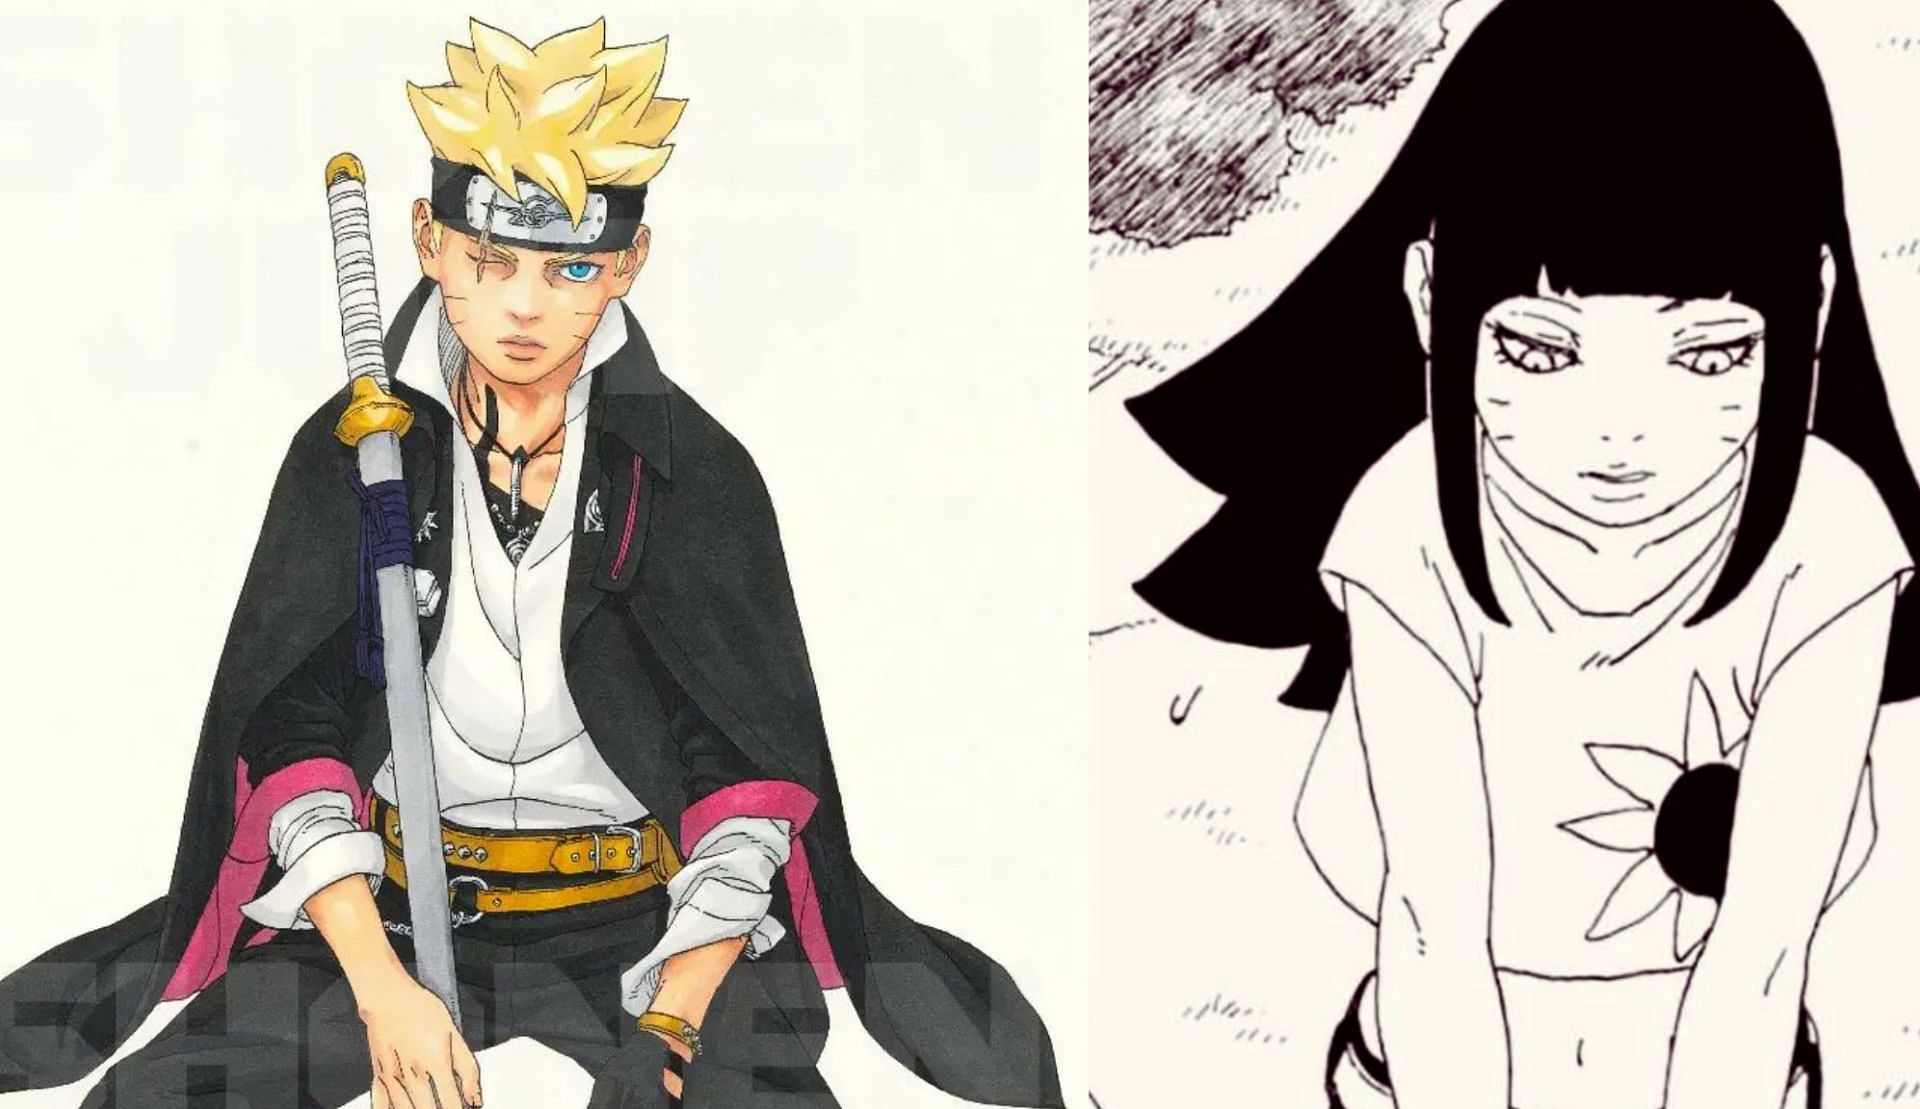 Boruto Reveals How Similar Naruto and Himawari Are